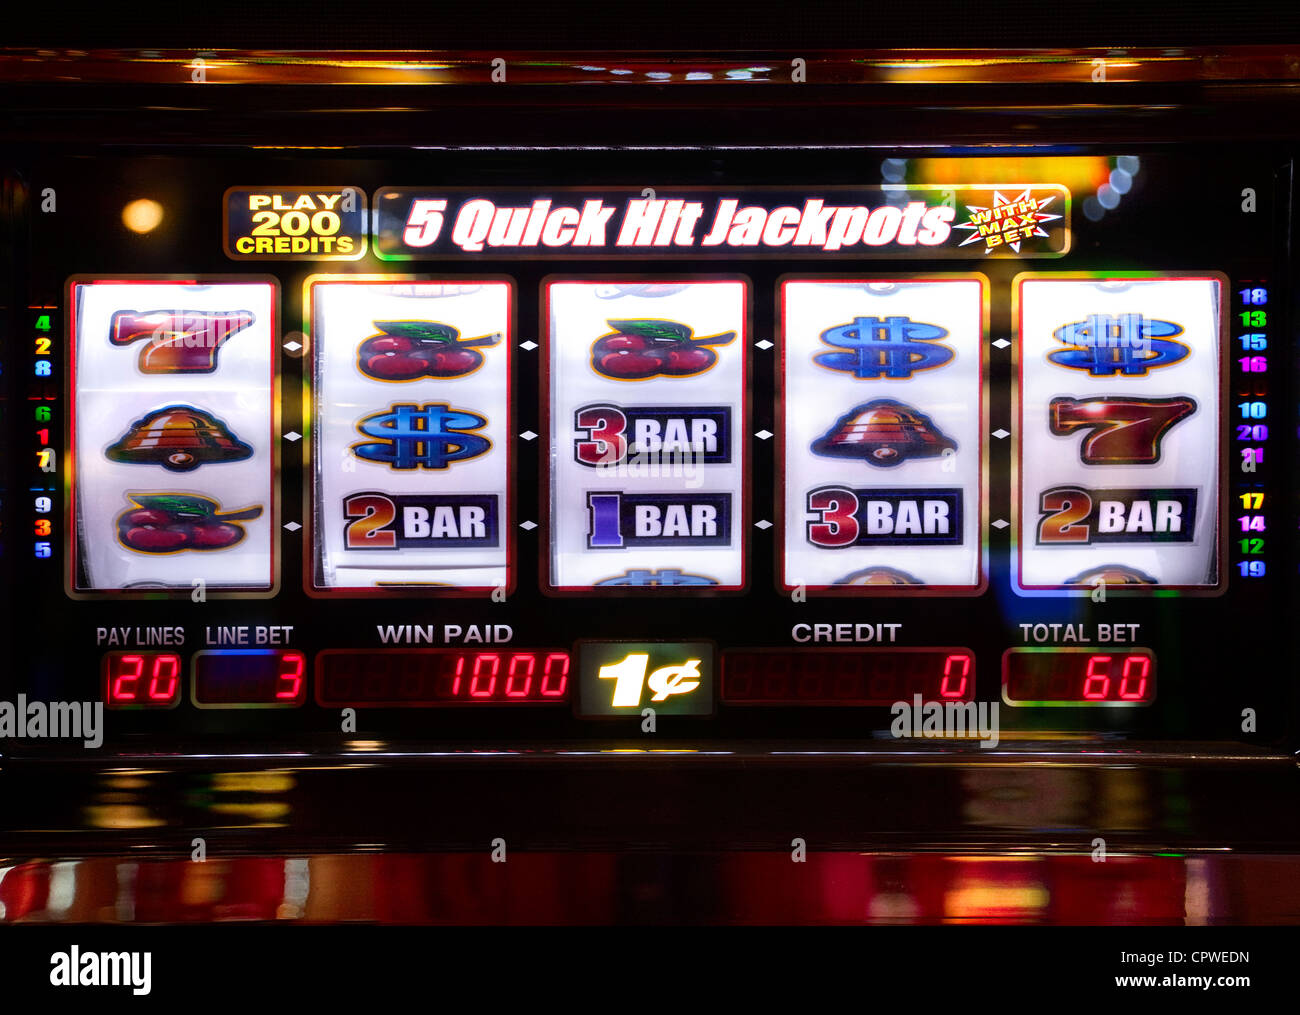 Slot machine display front view Stock Photo